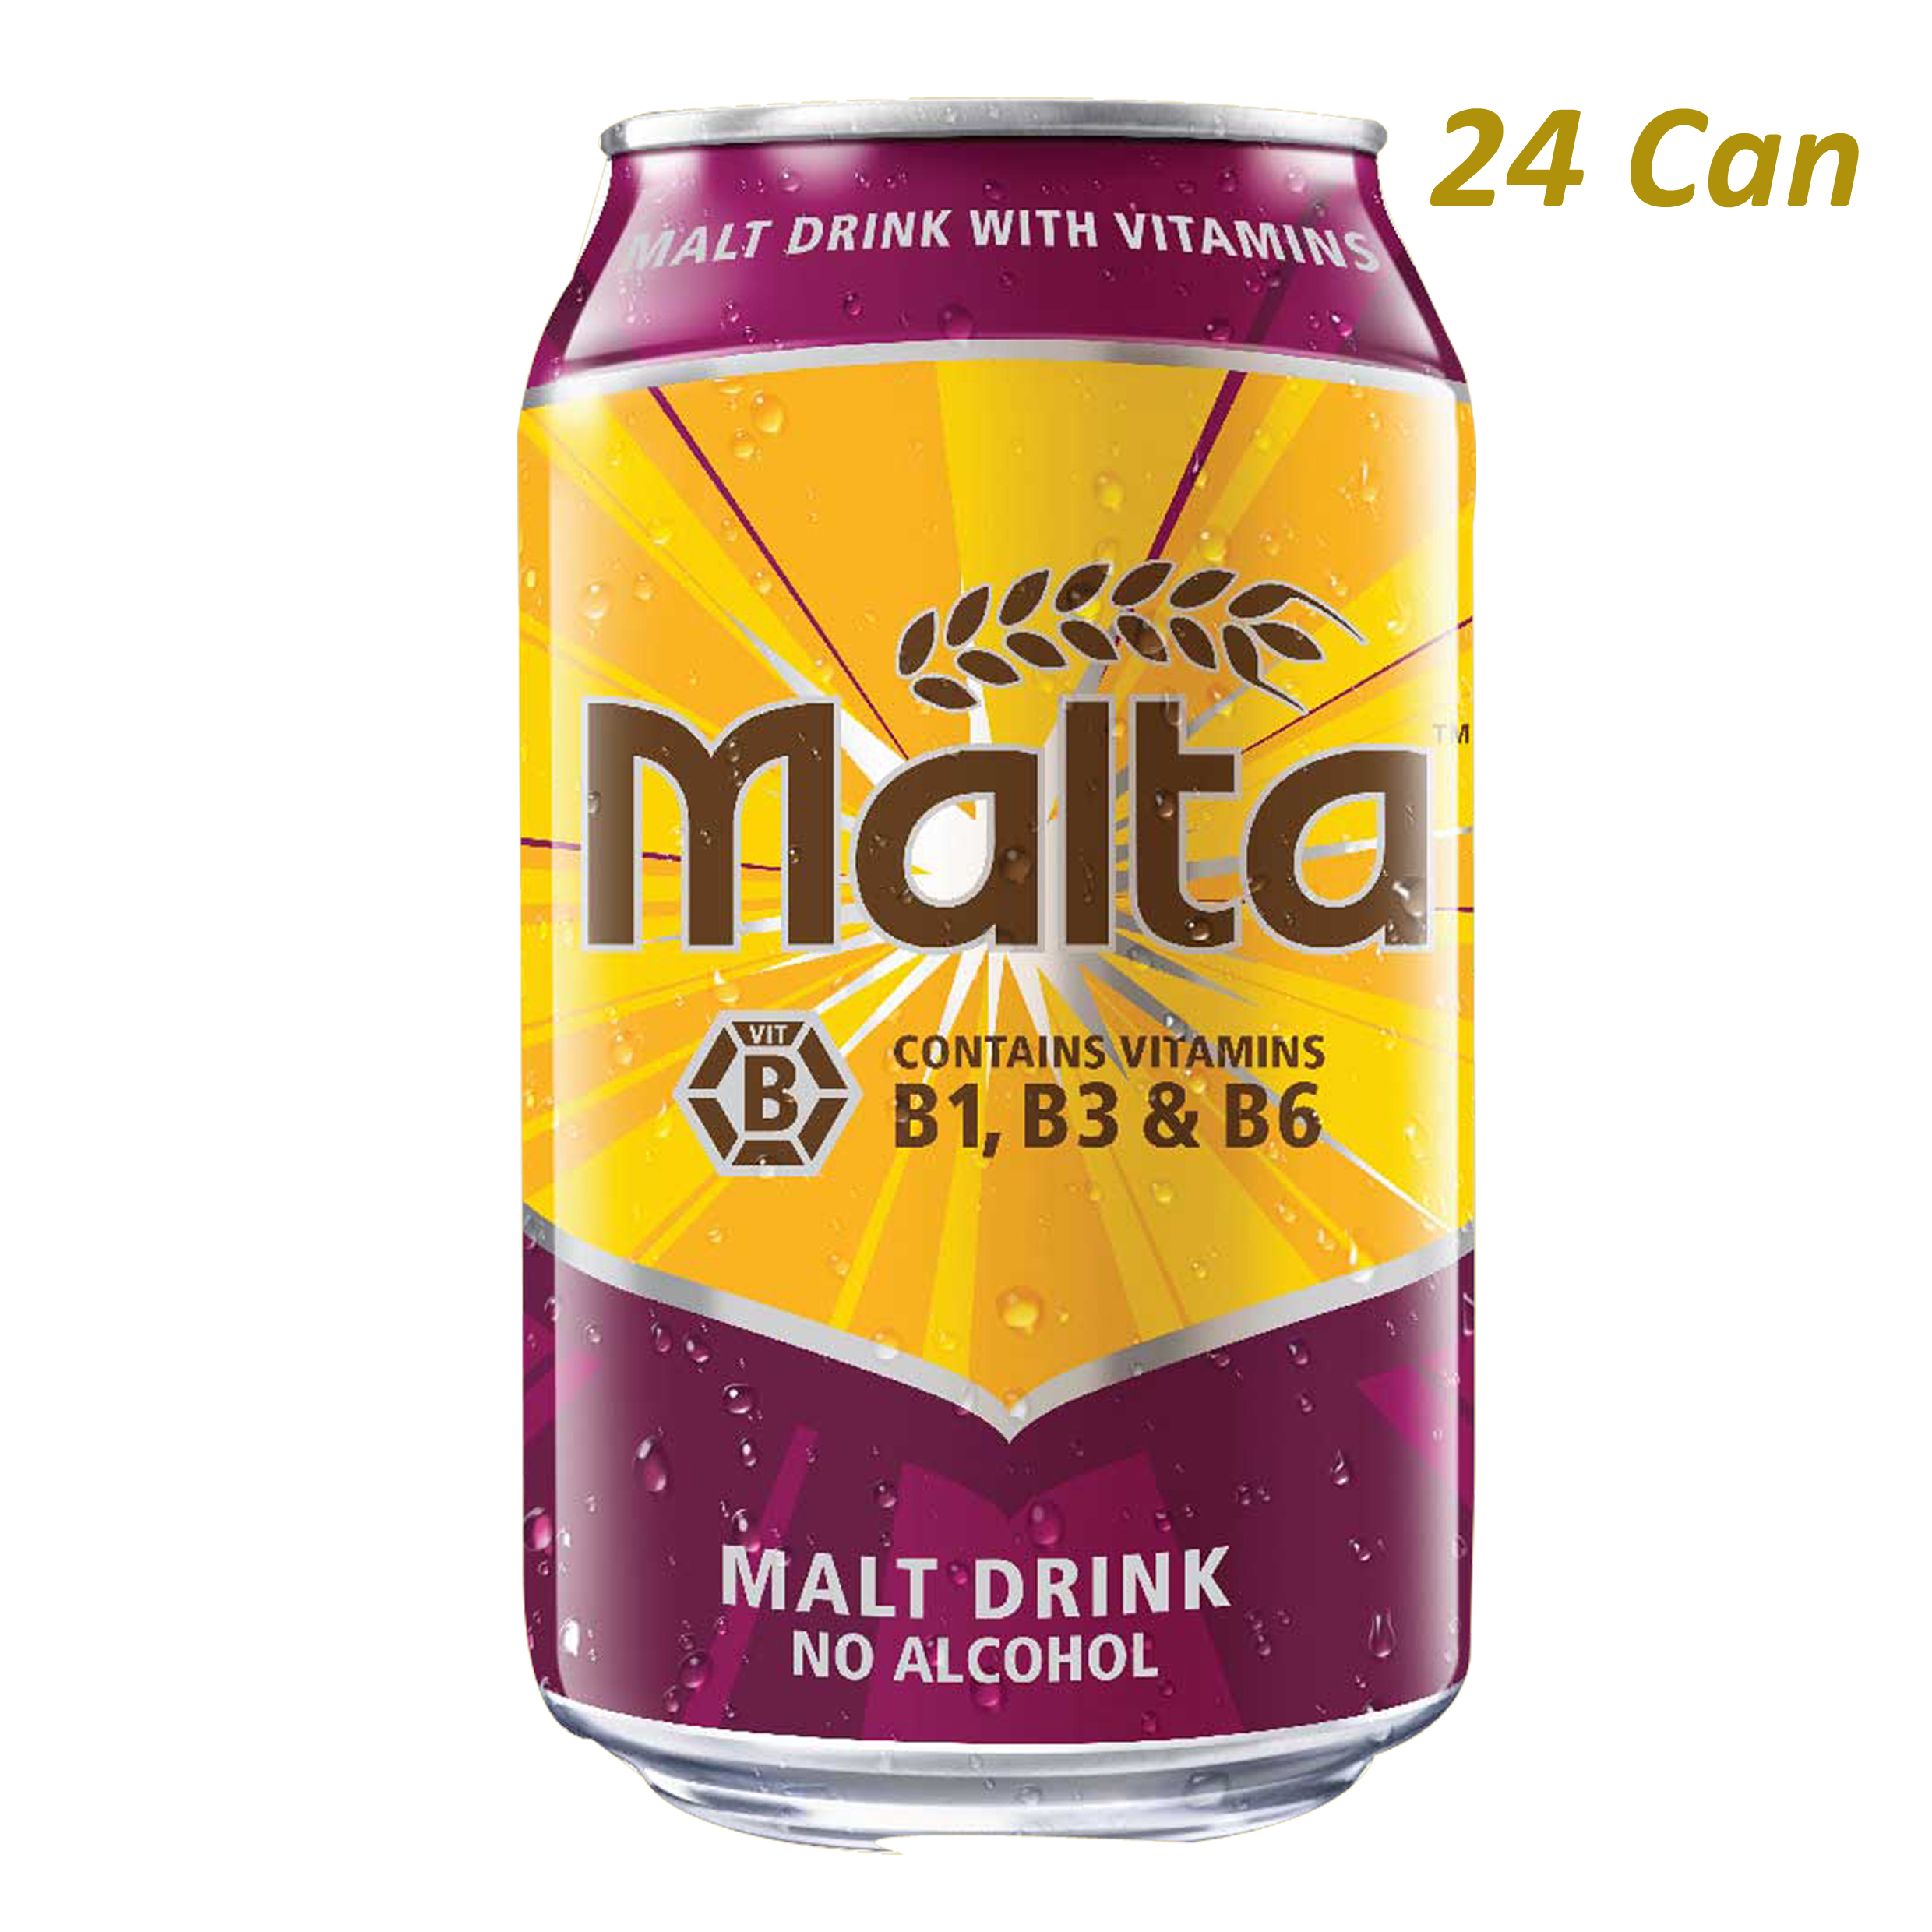 Image Malta can Malta - 麦芽精 (24 cans) 7680grams